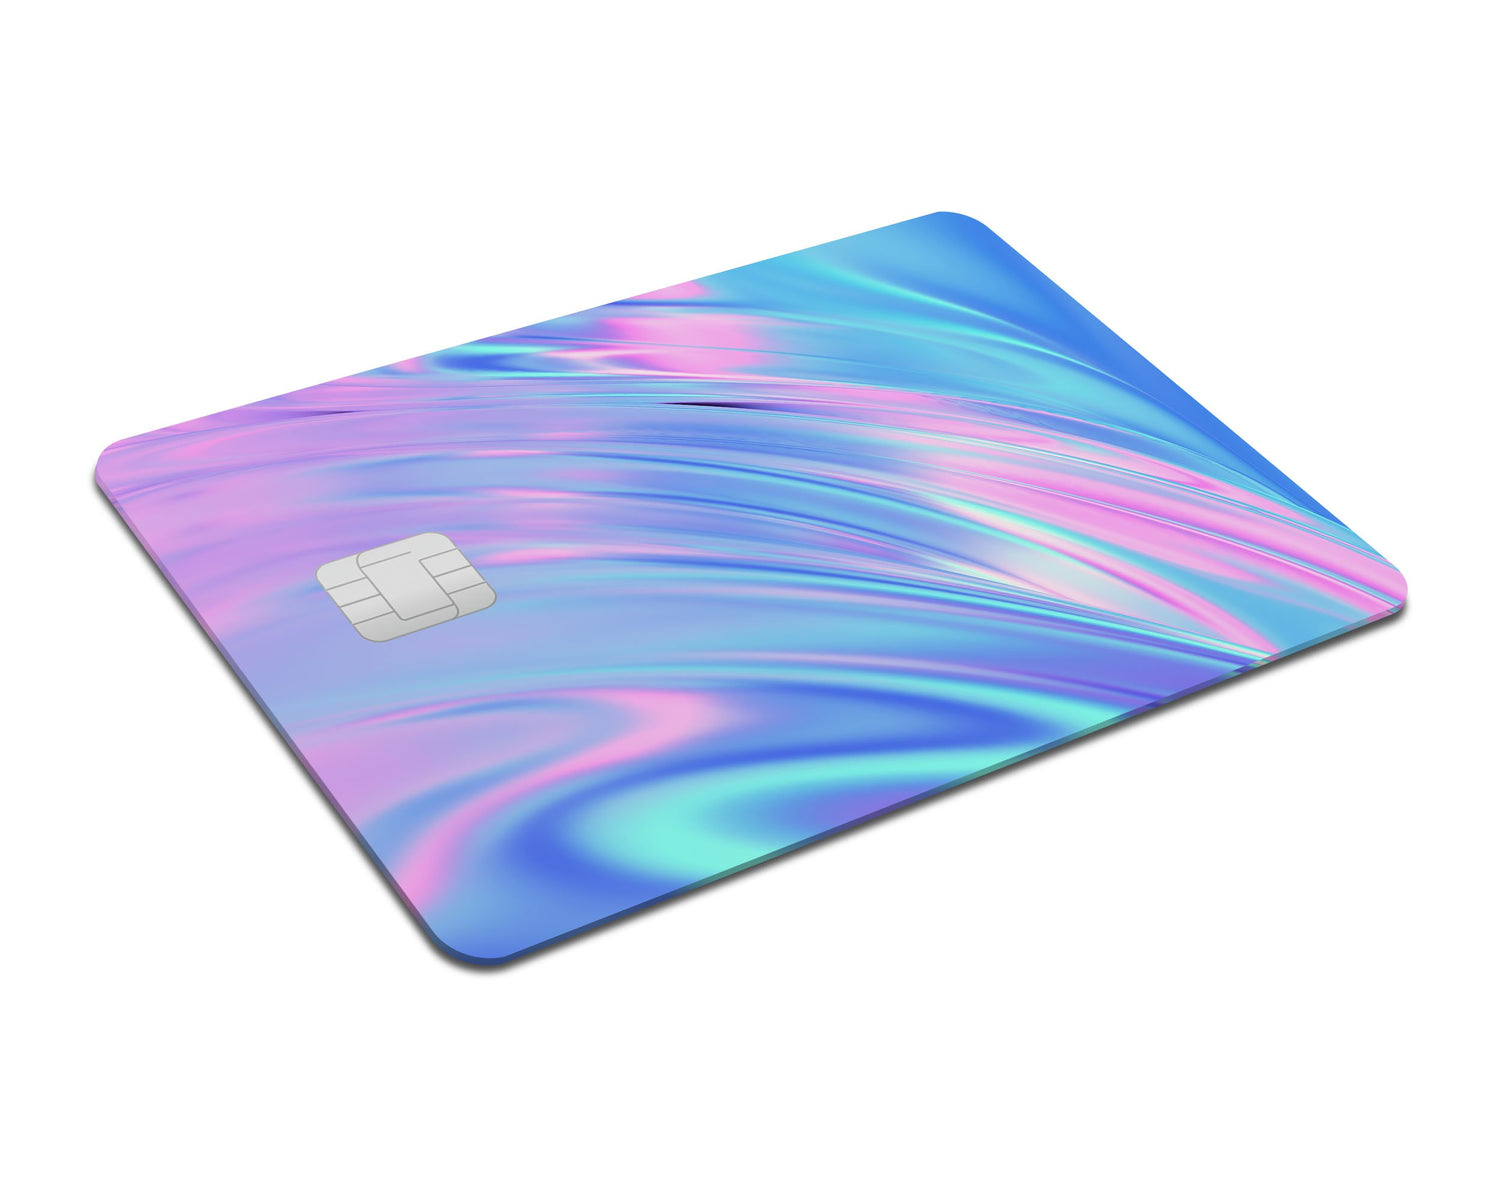 Flex Designs Credit Card Holographic Swirl Full Skins - Pattern  & Debit Card Skin